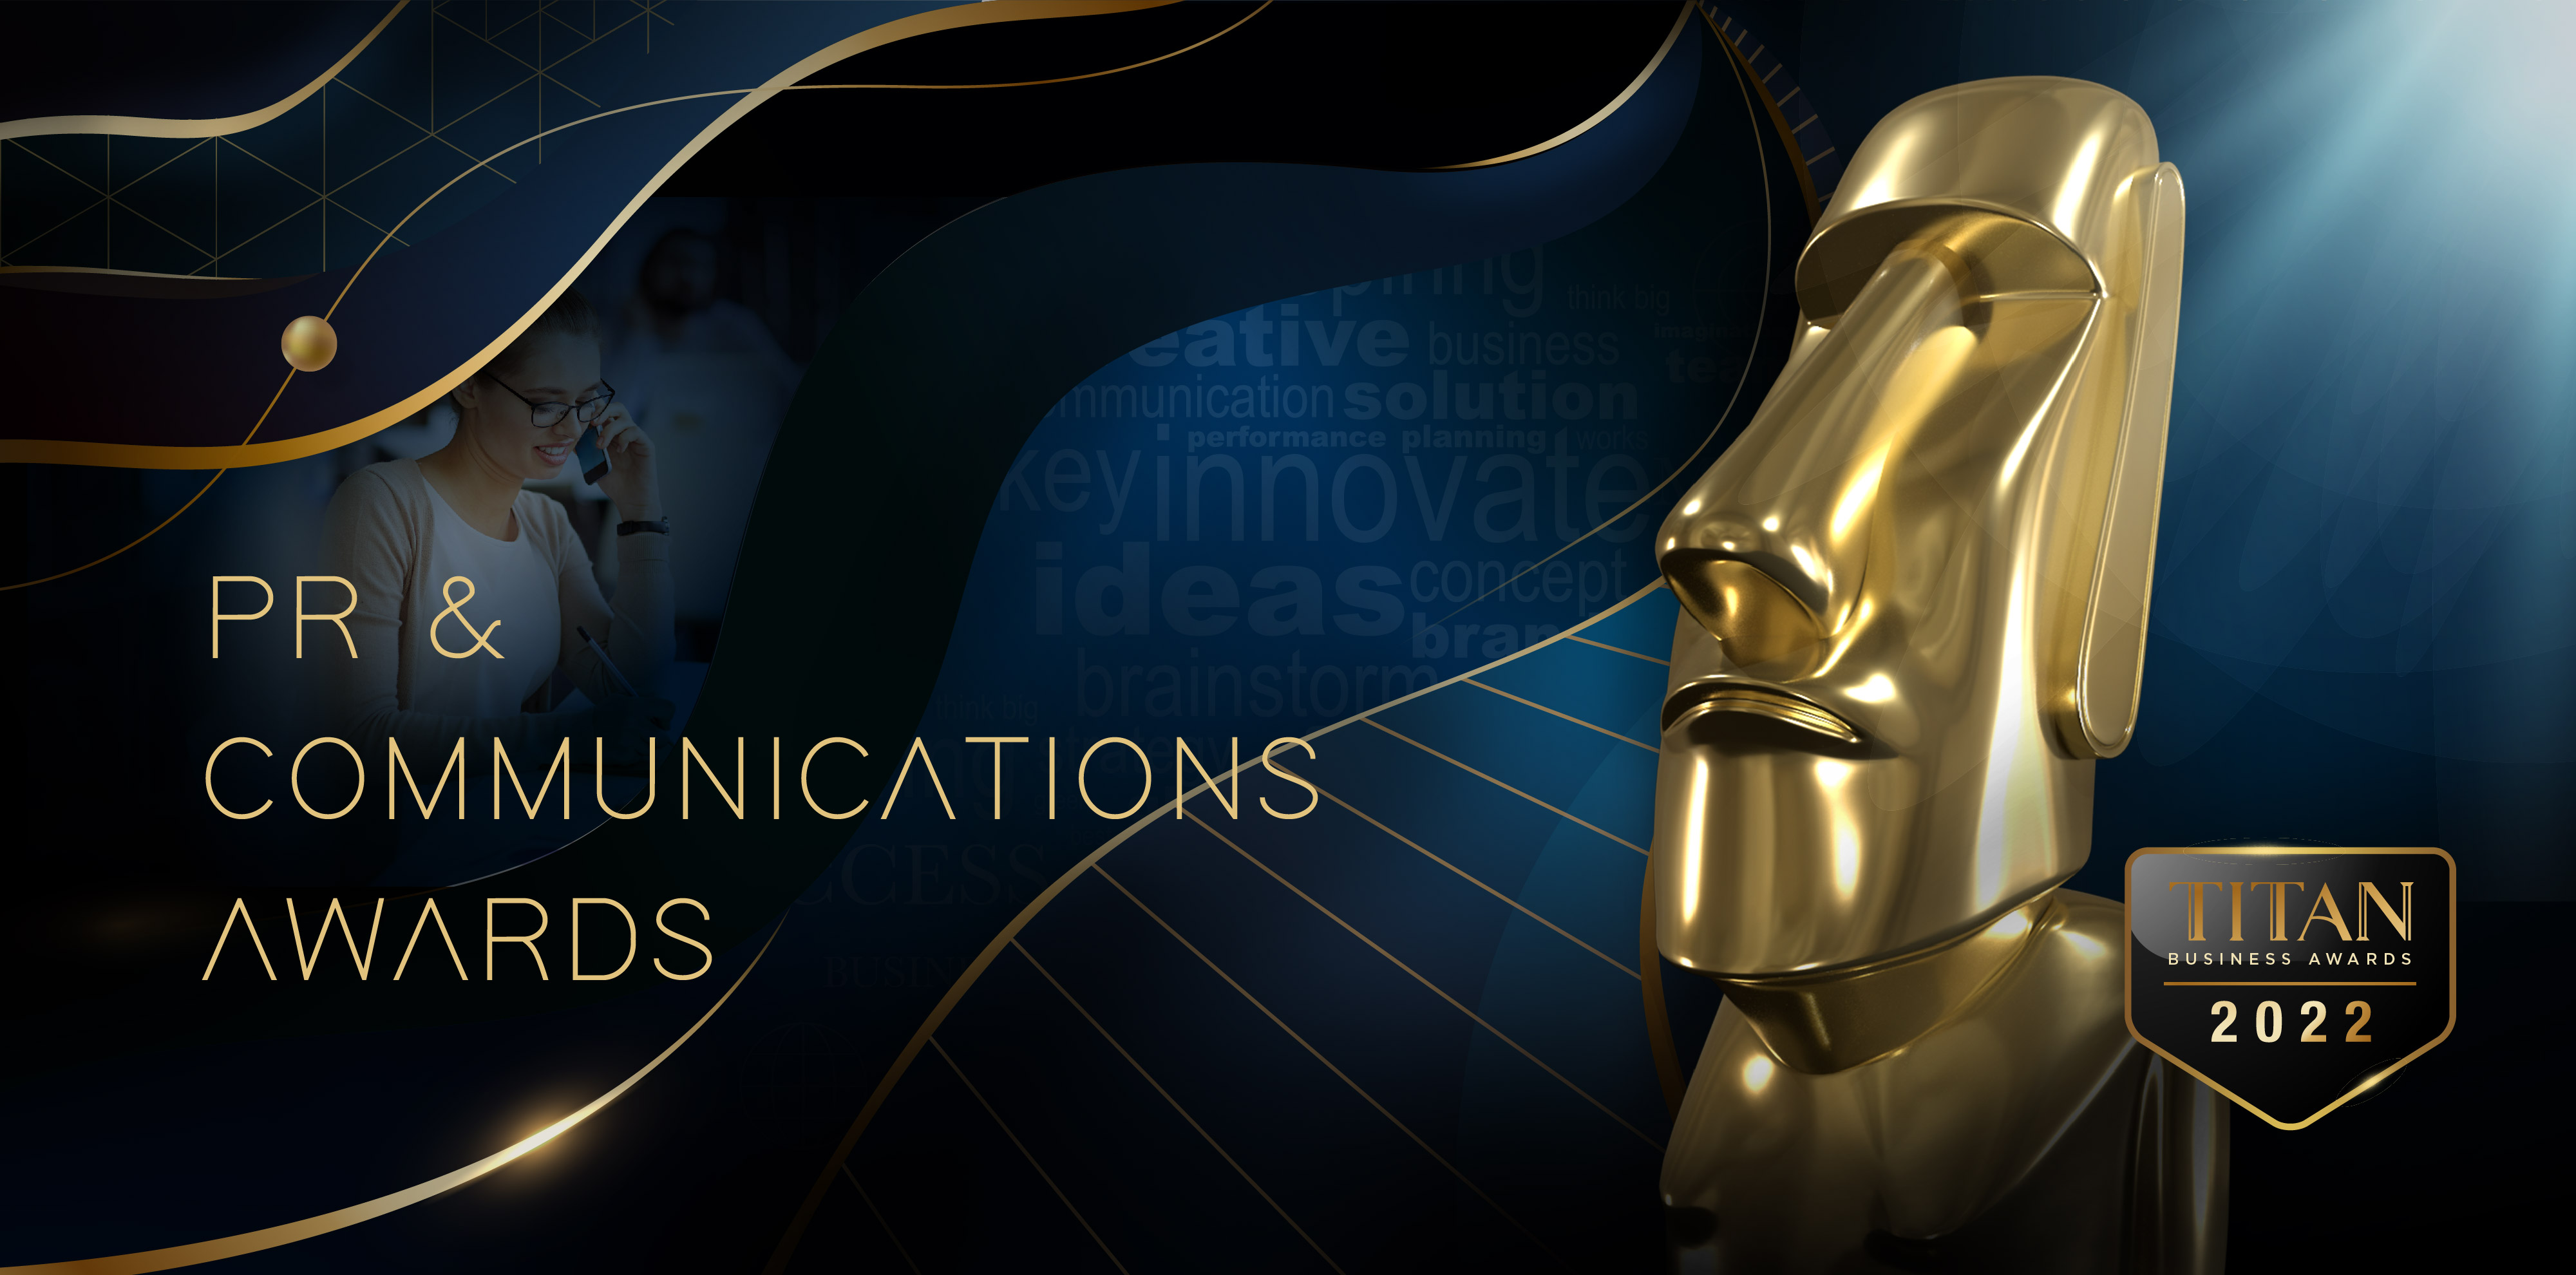 TITAN PR & Communications Awards | International Business Awards